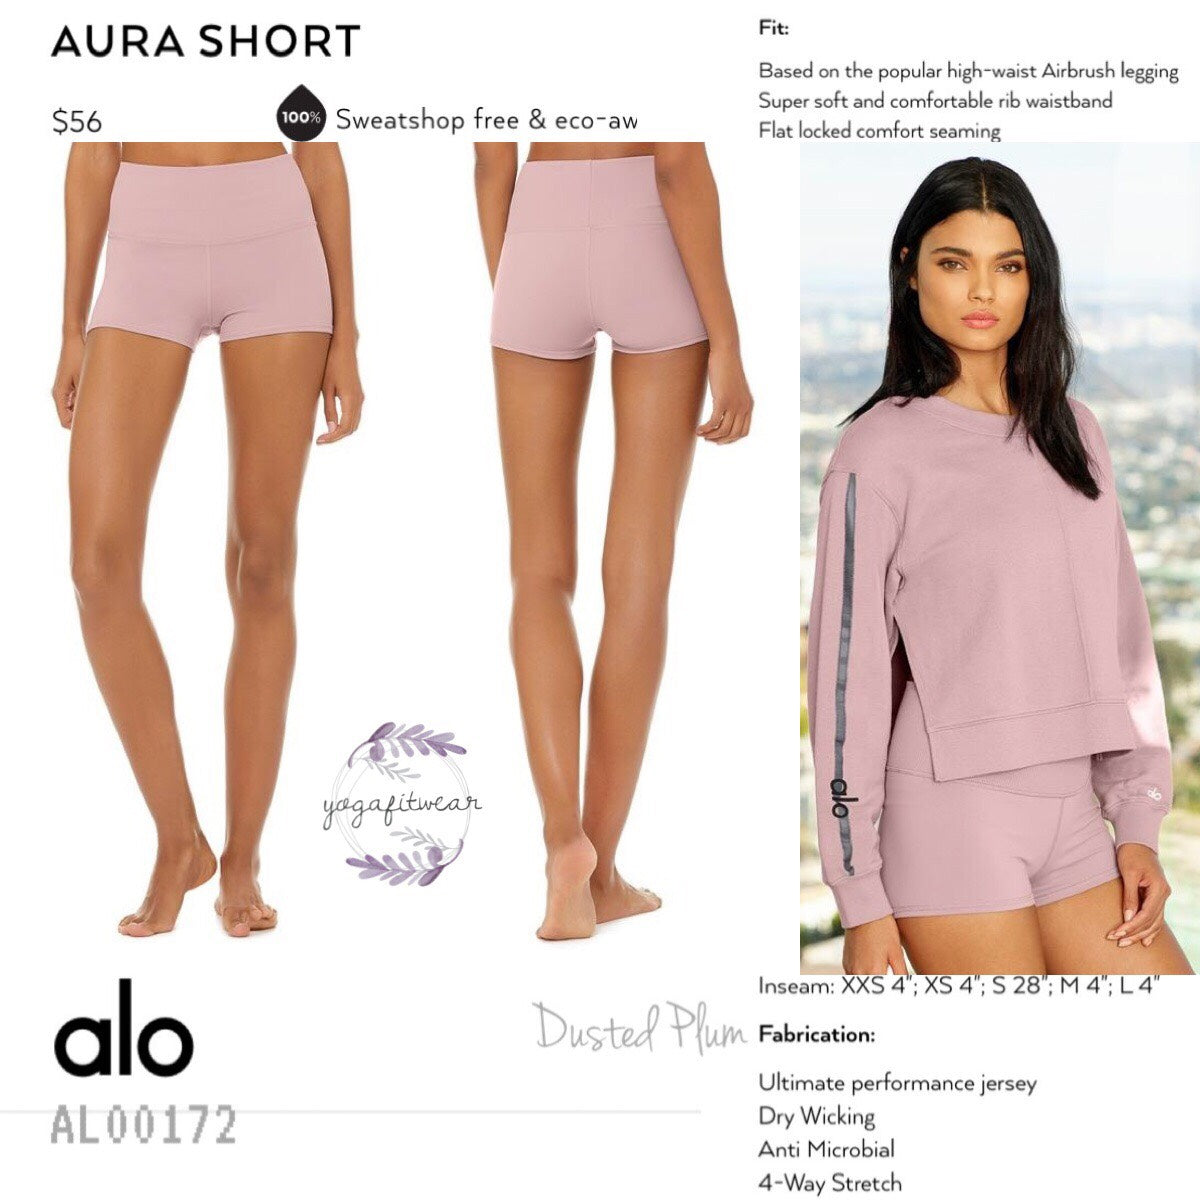 Alo - Aura Short (Dusted Plum) (AL00172)